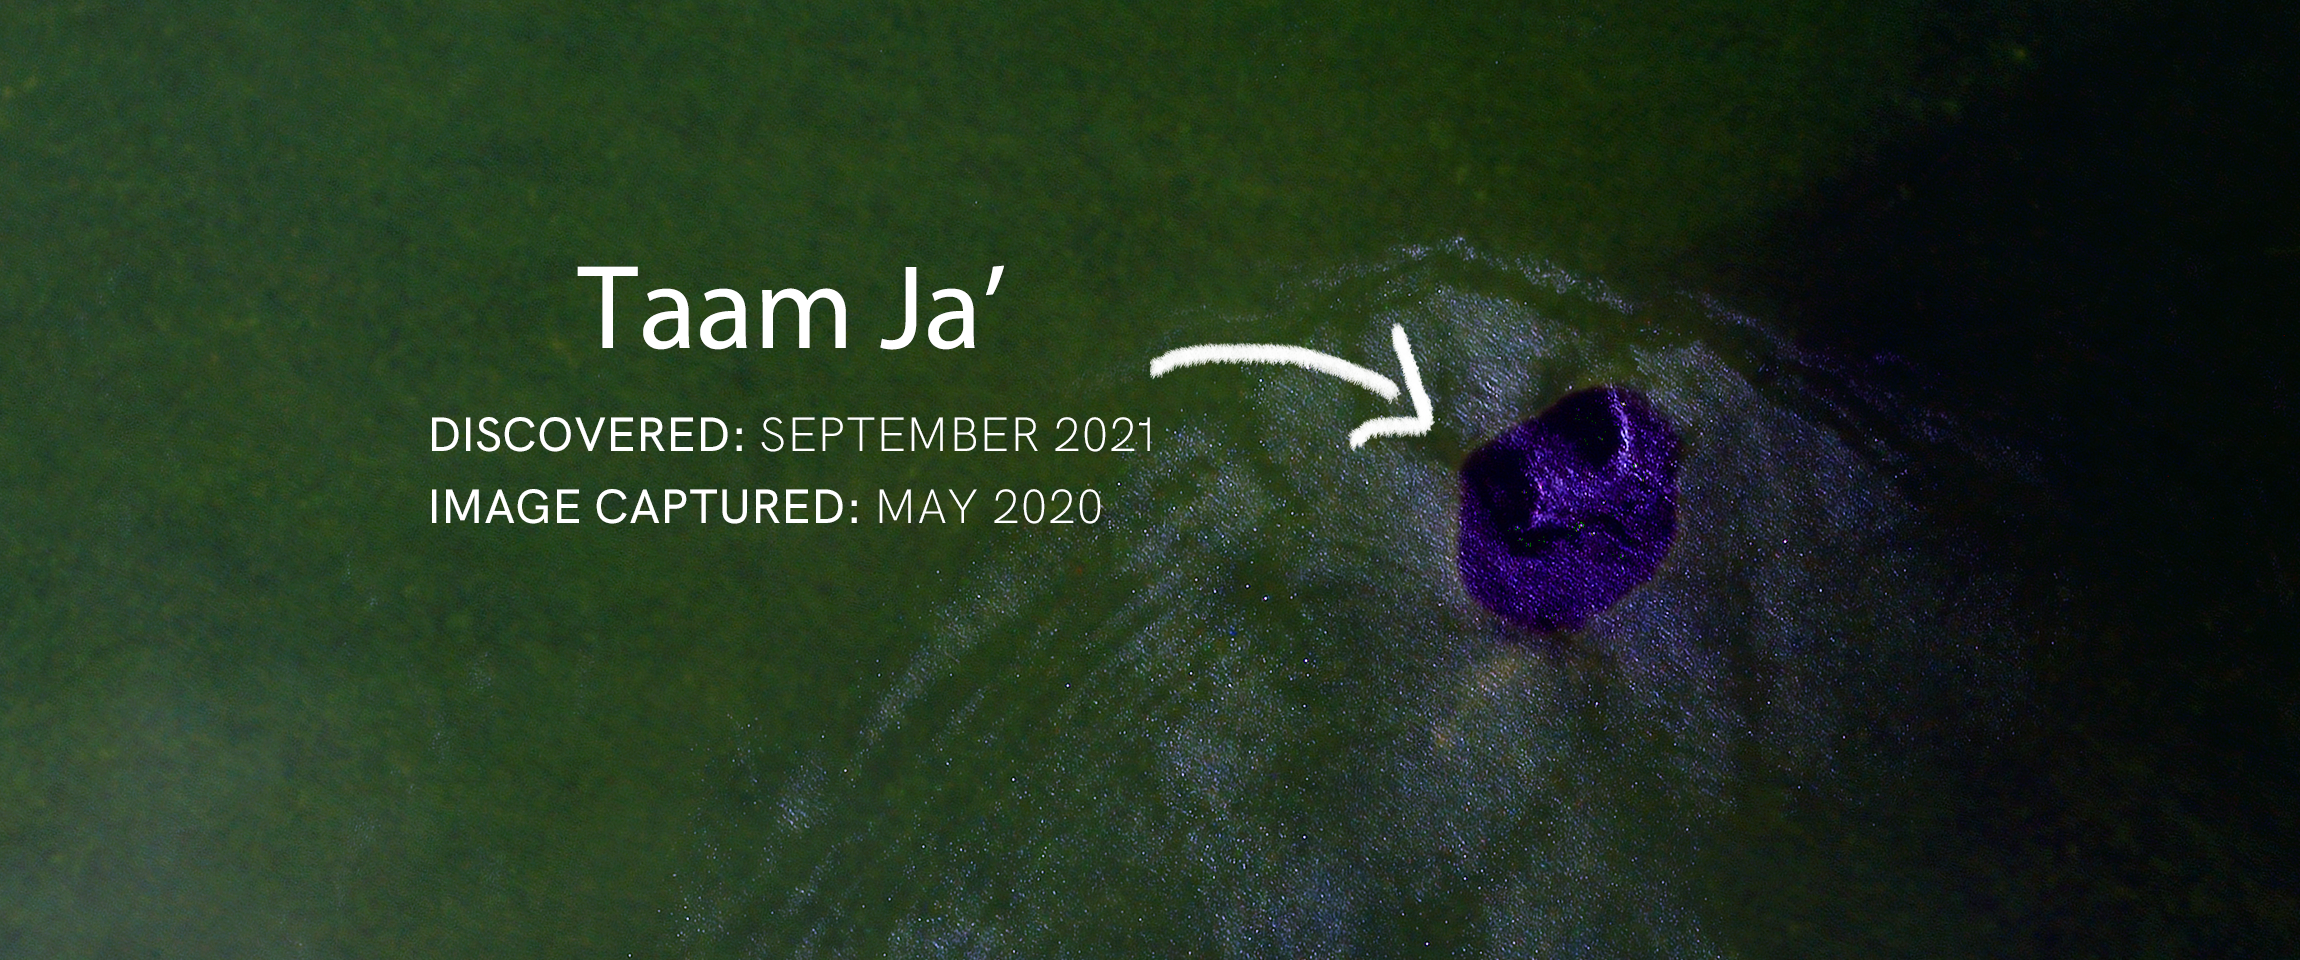 May 9, 2020: Optical Image of Taam Ja'